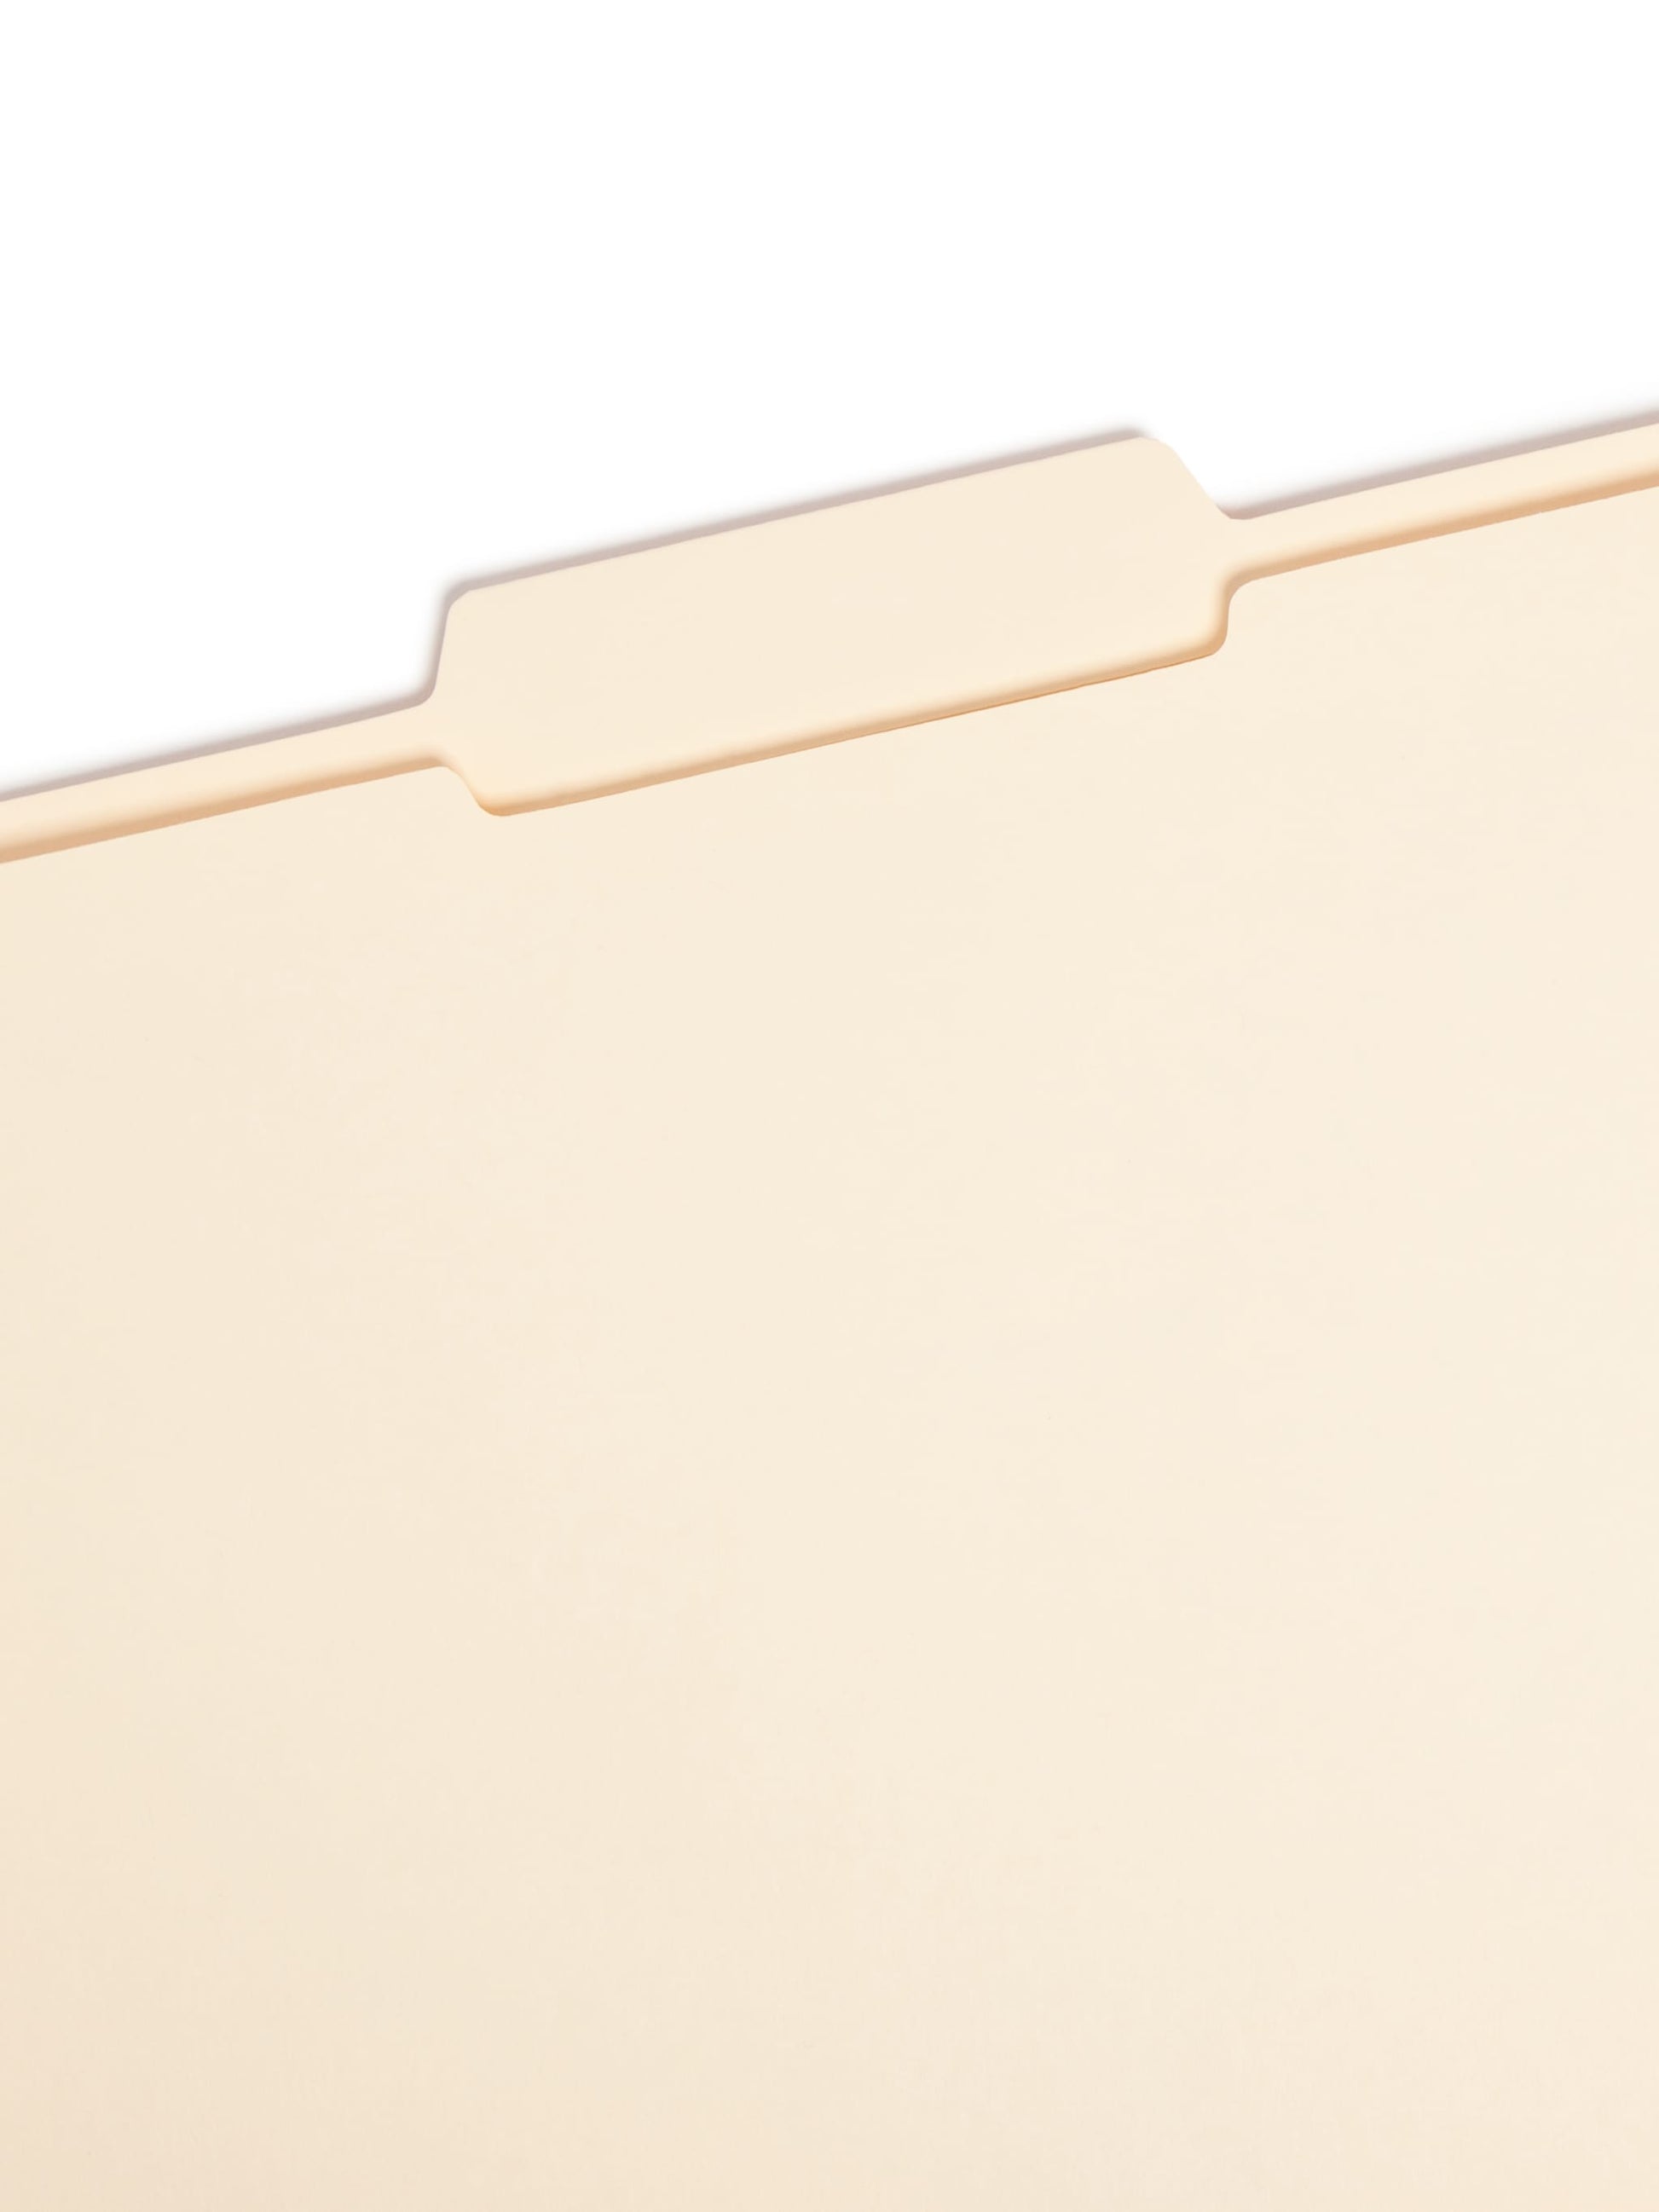 Reinforced Tab File Folders, 1/3-Cut Center Tab, Manila Color, Letter Size, Set of 100, 086486103367